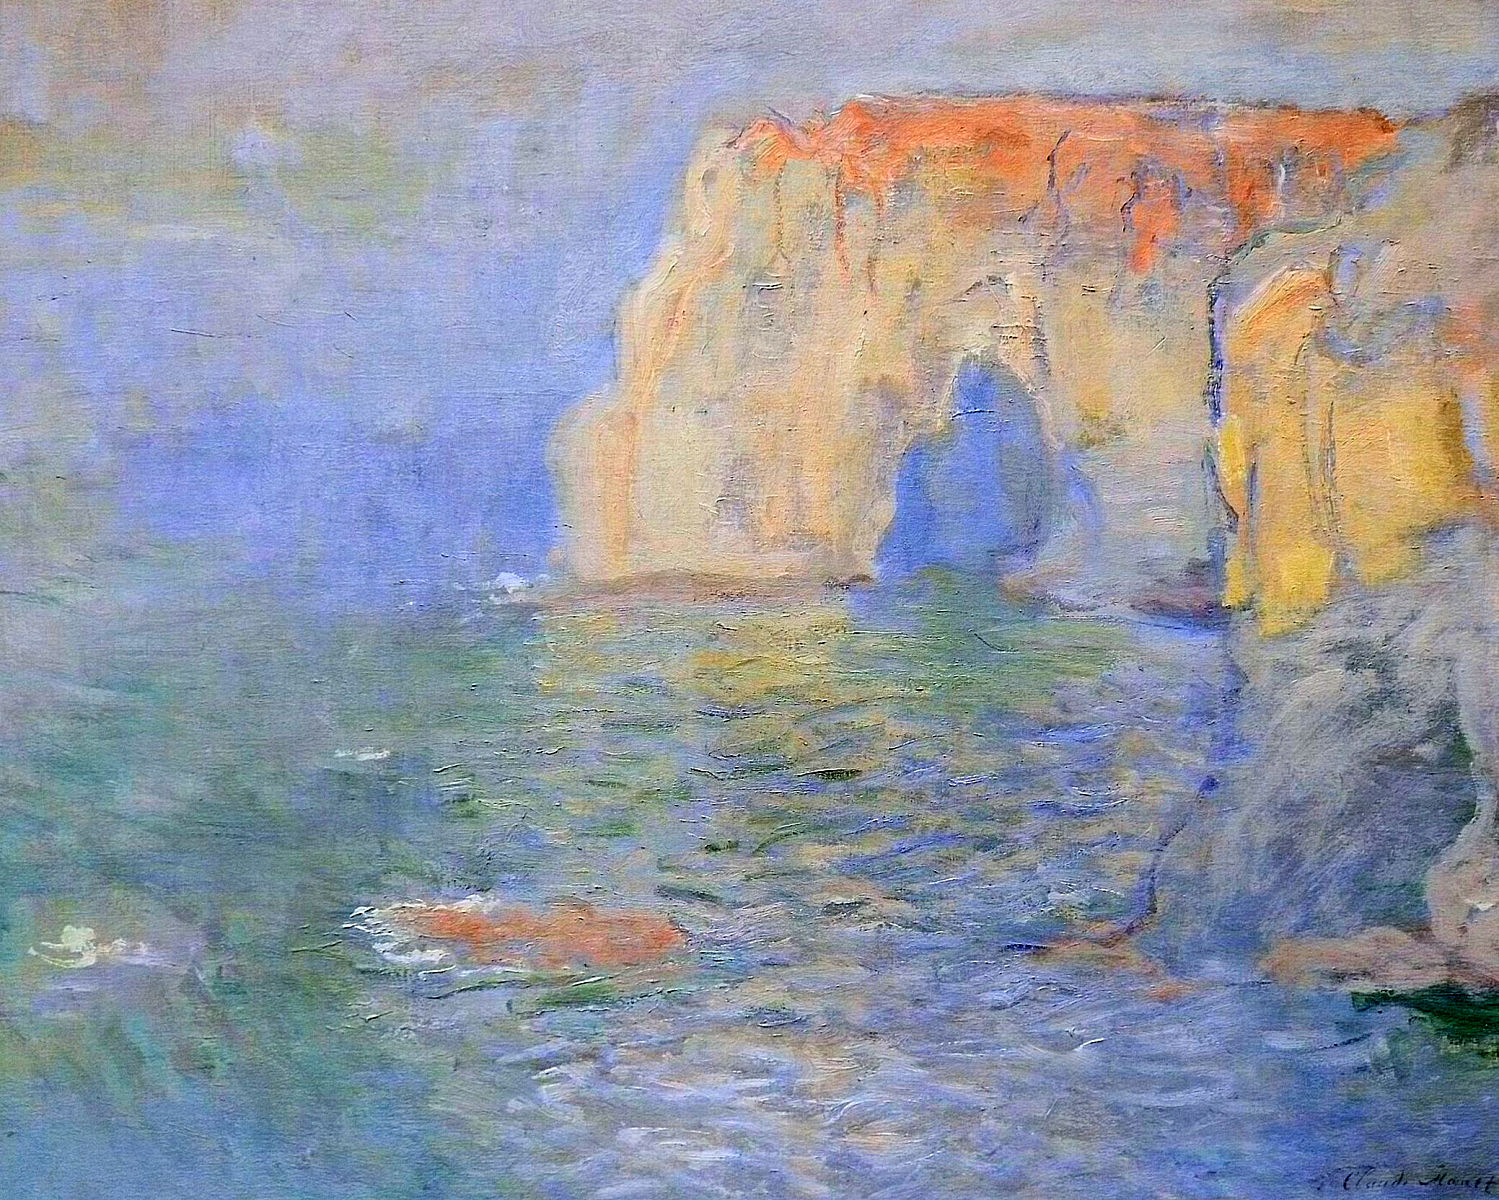 Claude+Monet-1840-1926 (778).jpg